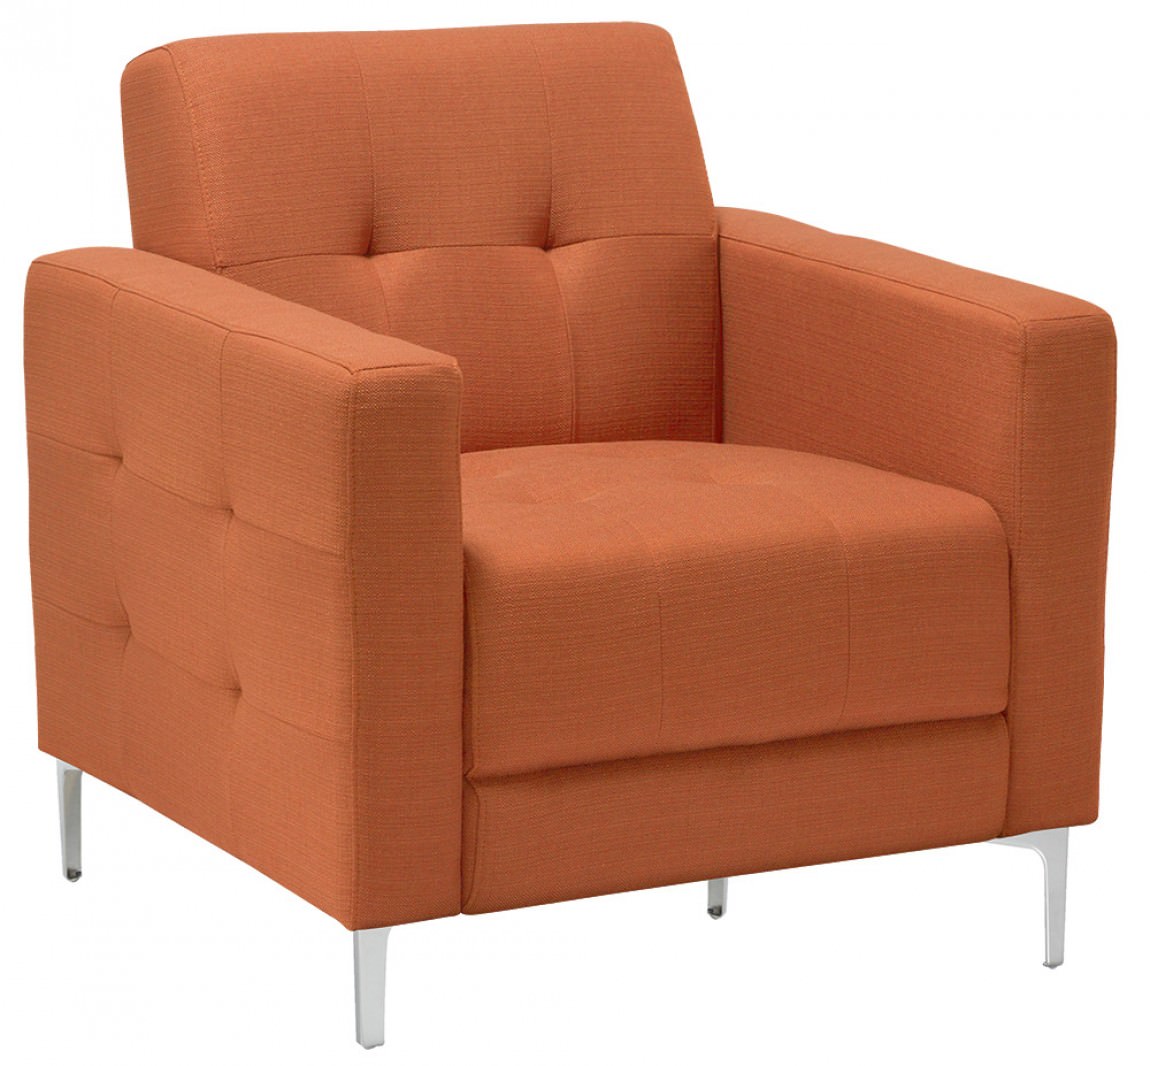 Orange Tufted Club Chair